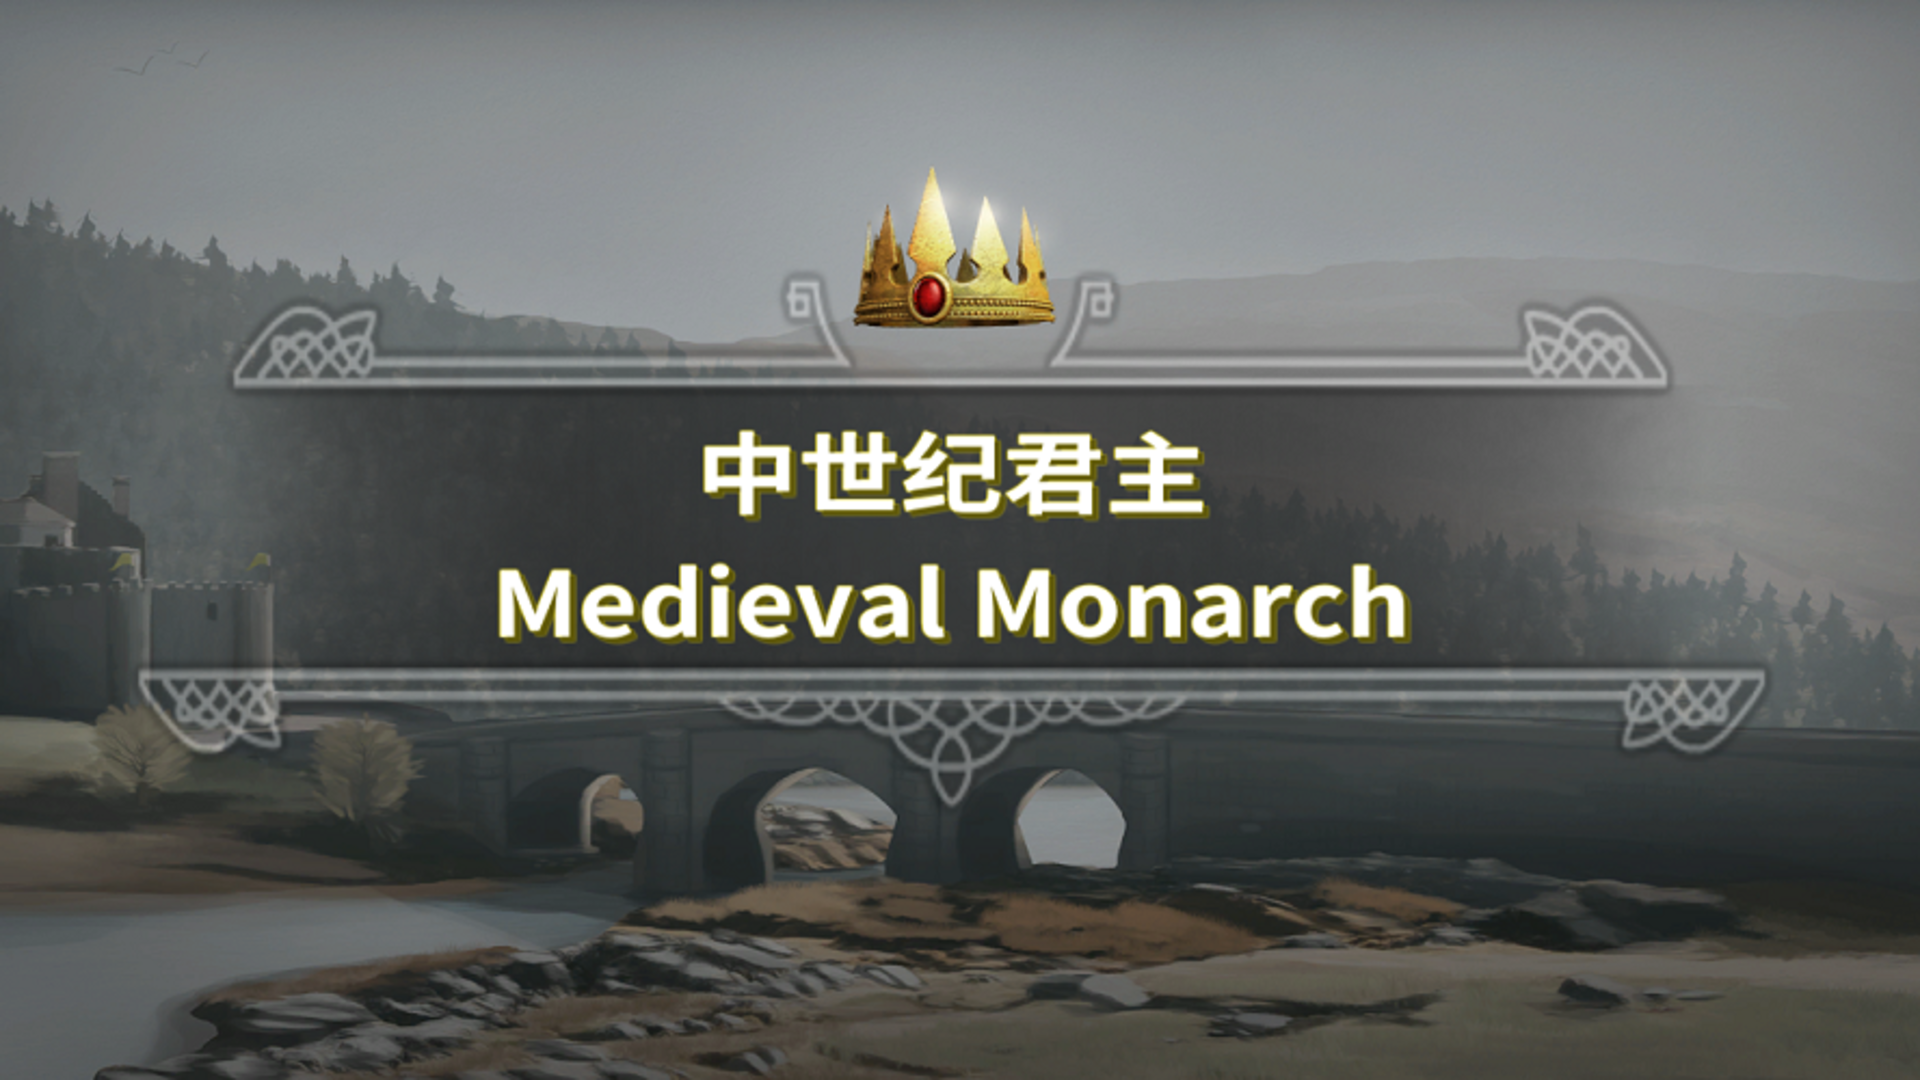 Banner of 中世紀君主 